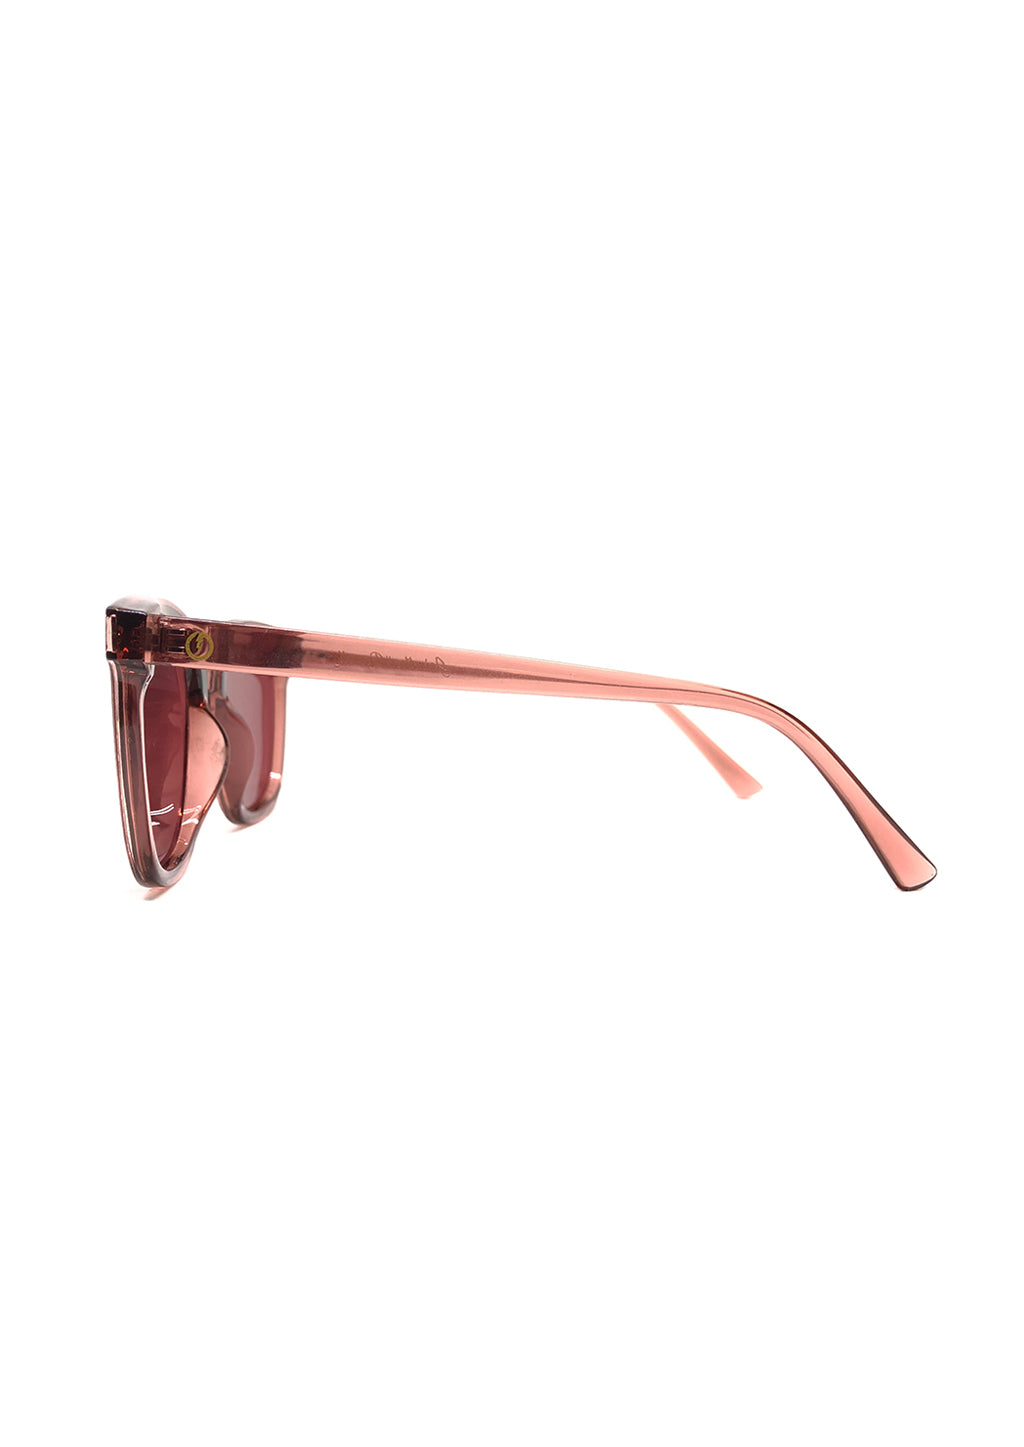 Magnolia Wayfarer sunglasses - Details